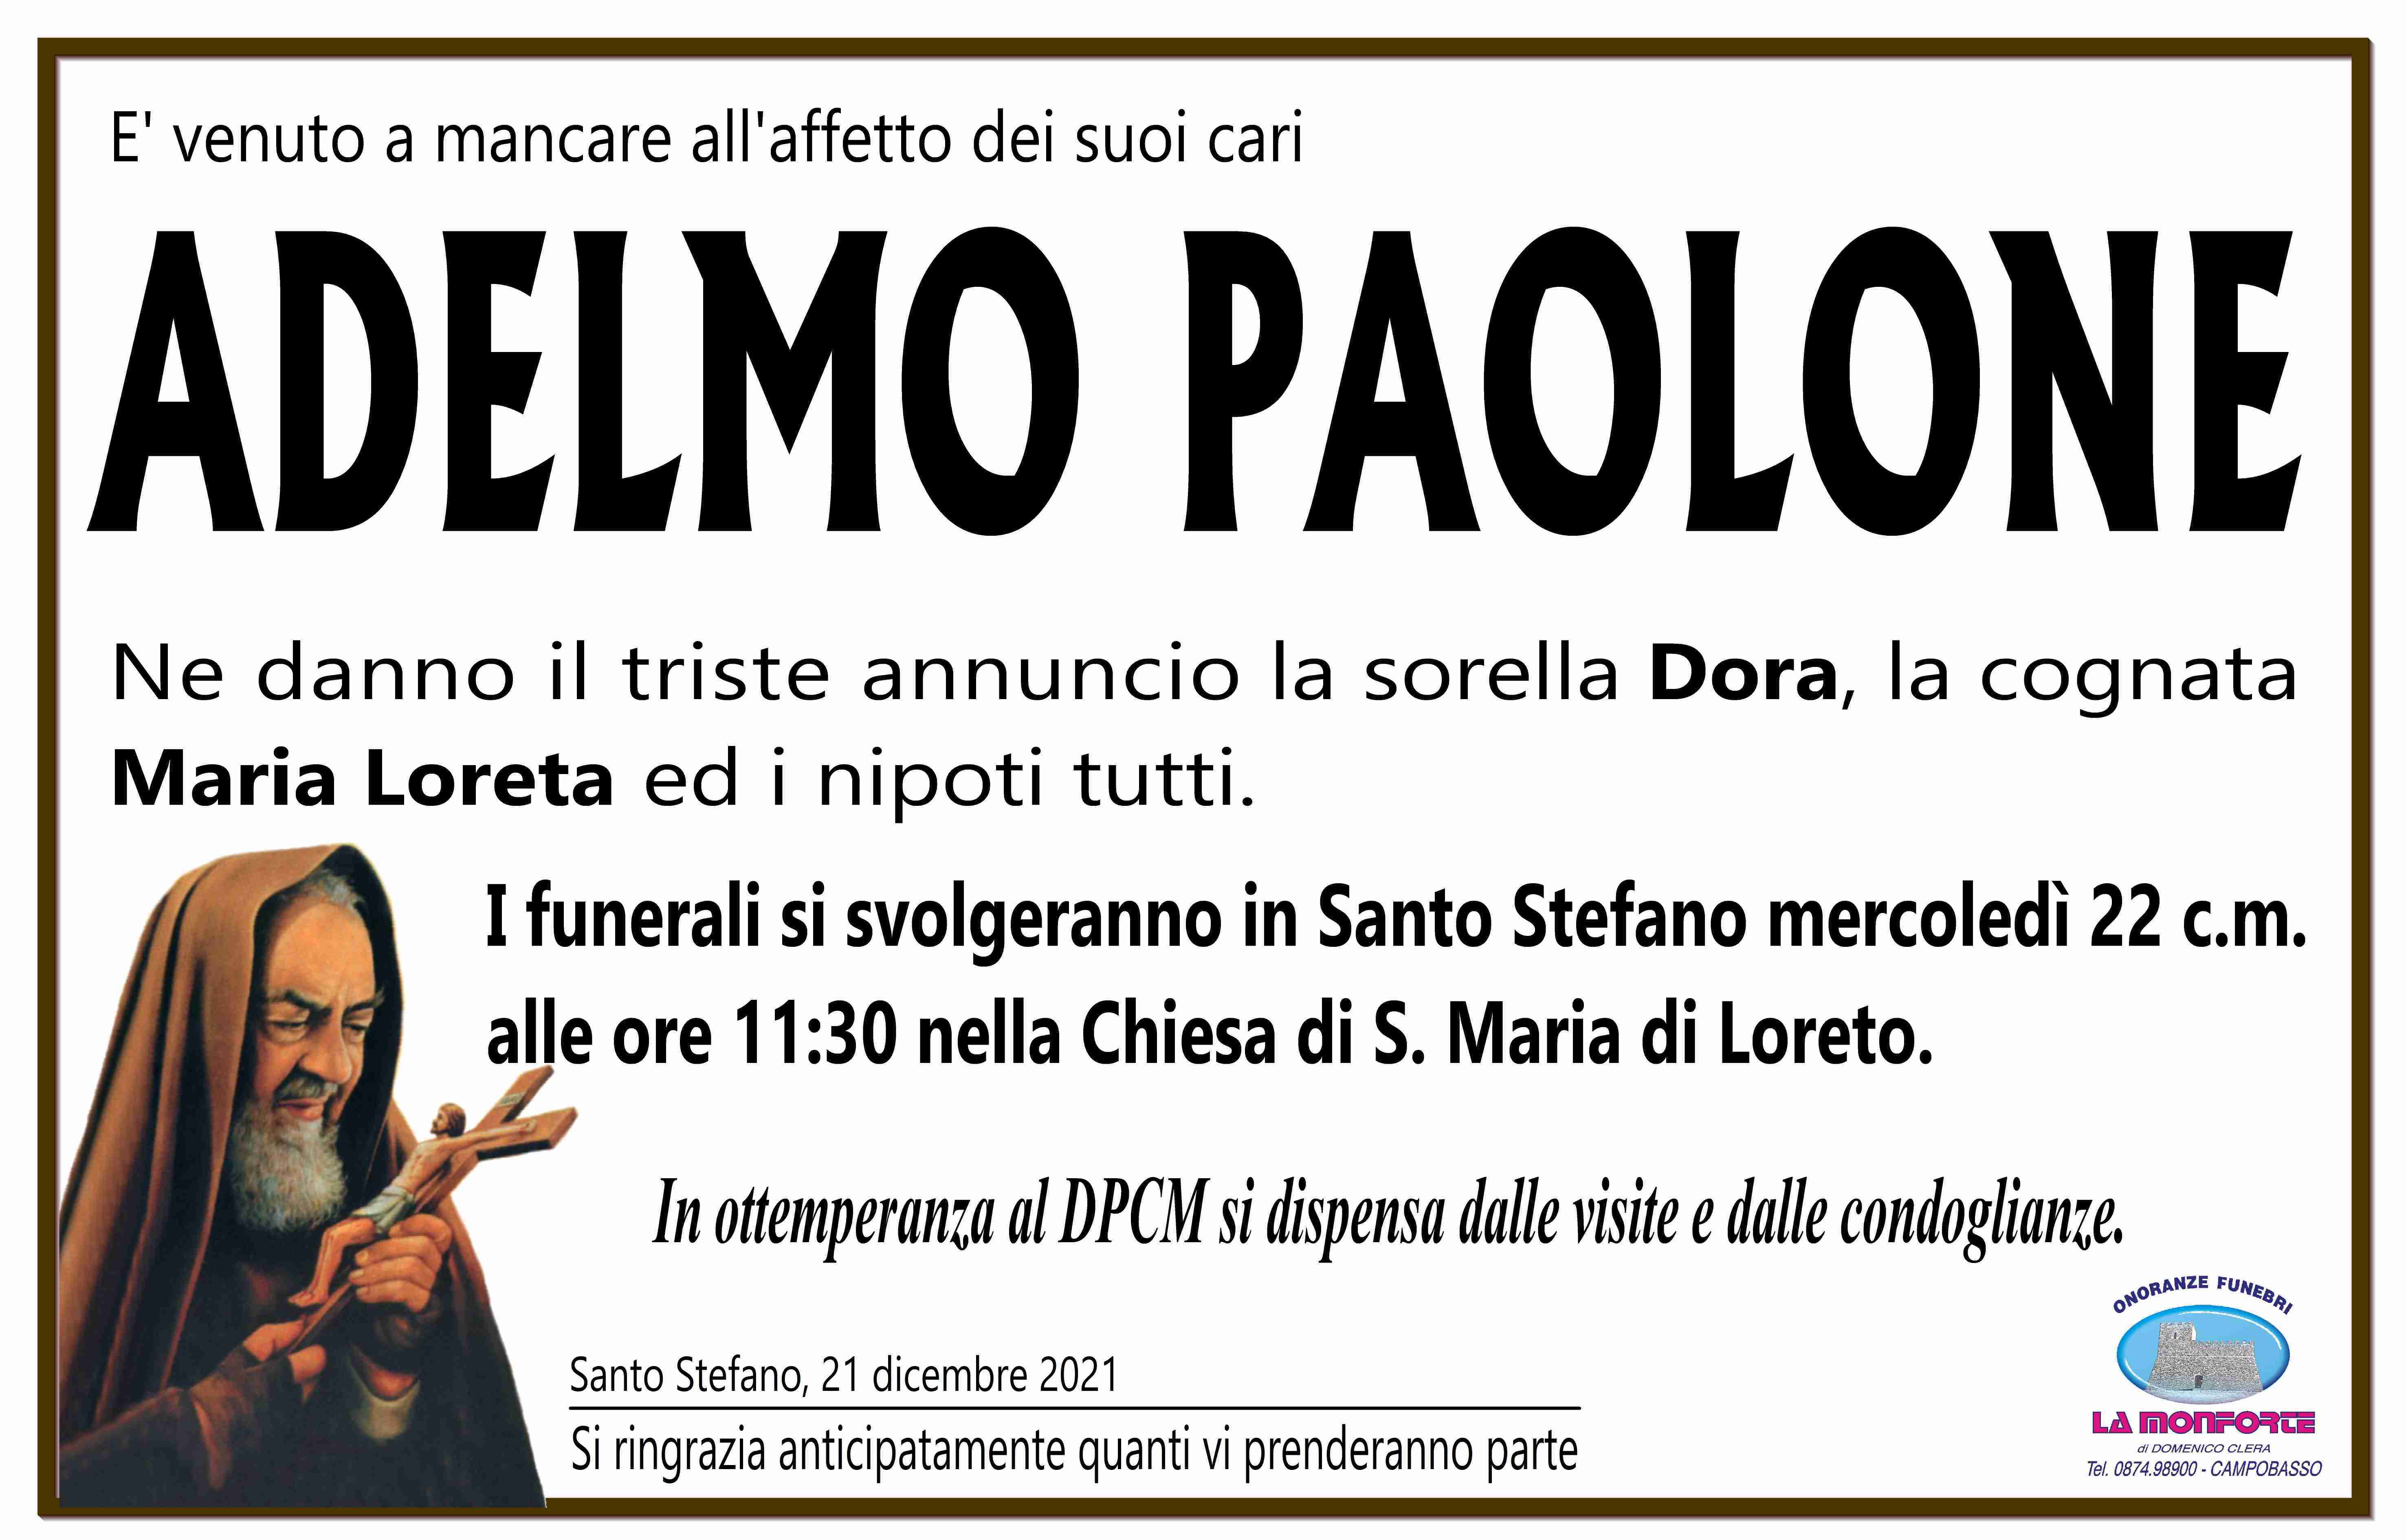 Adelmo Paolone